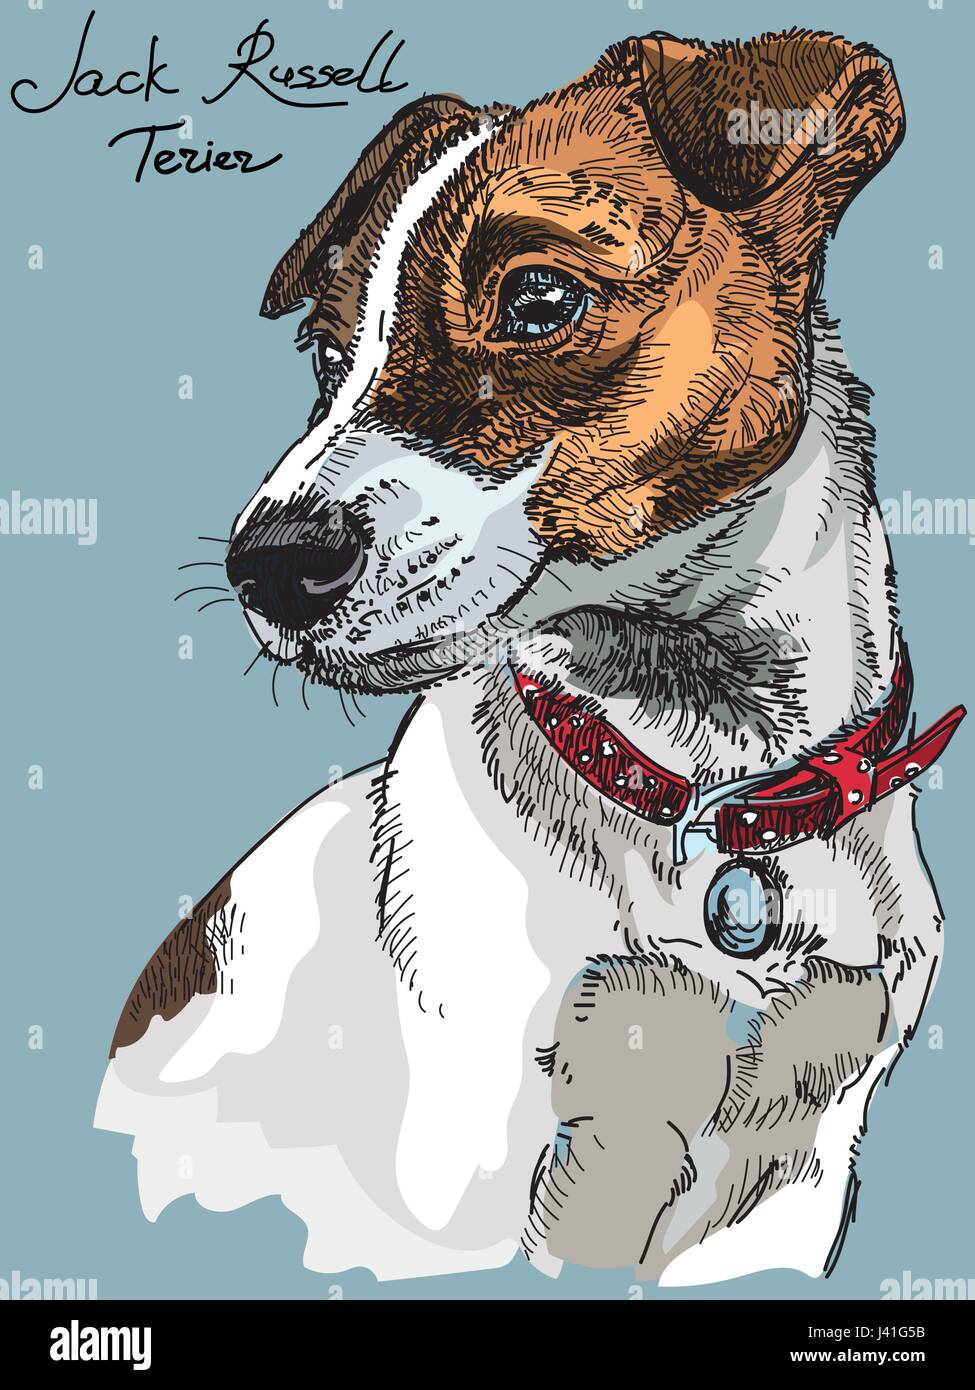 https://c8.alamy.com/comp/J41G5B/colorful-vector-portrait-of-dog-jack-russel-terrier-hand-drawing-illustration-J41G5B.jpg